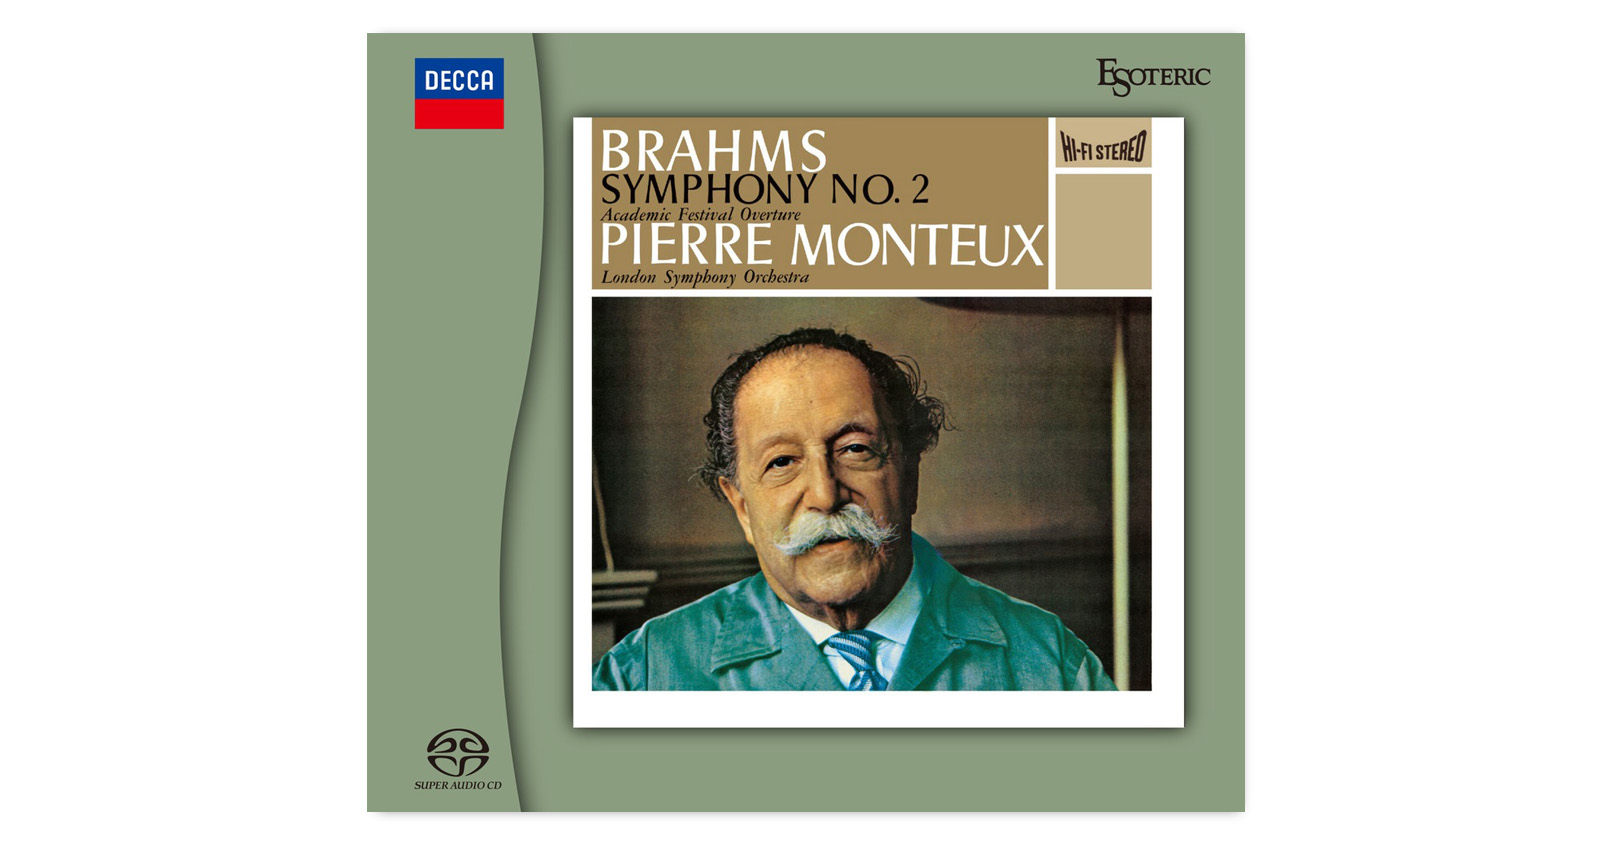 Johannes Brahms: Symphonie No. 2, Academic Festival Overture, Pierre Monteux/London Symphony Orchestra - Hybrid SACD, Limited, Remastered